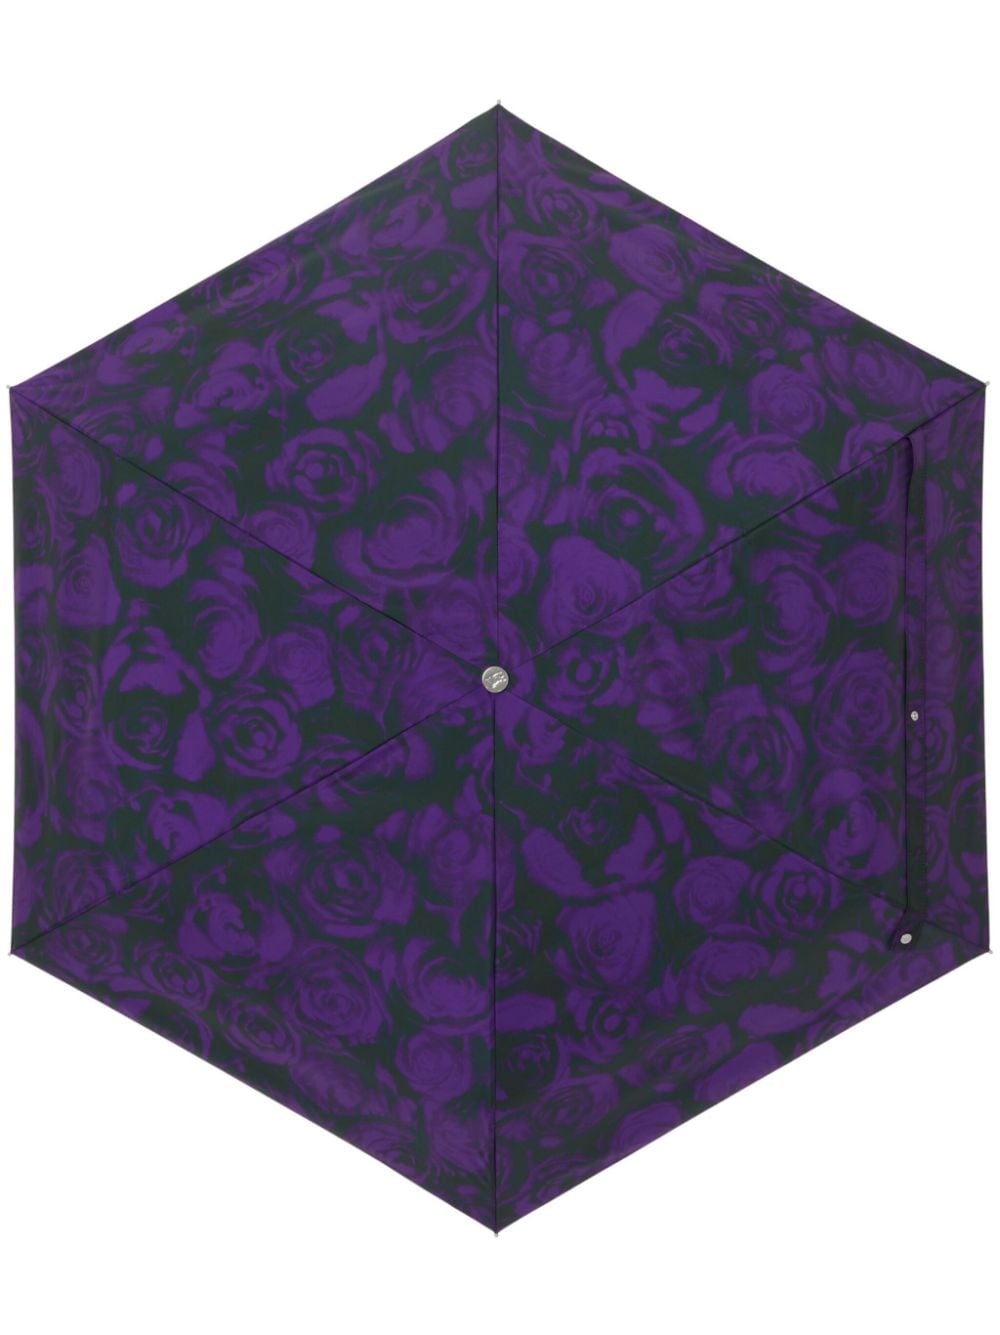 rose-print two-tone umbrella - 1